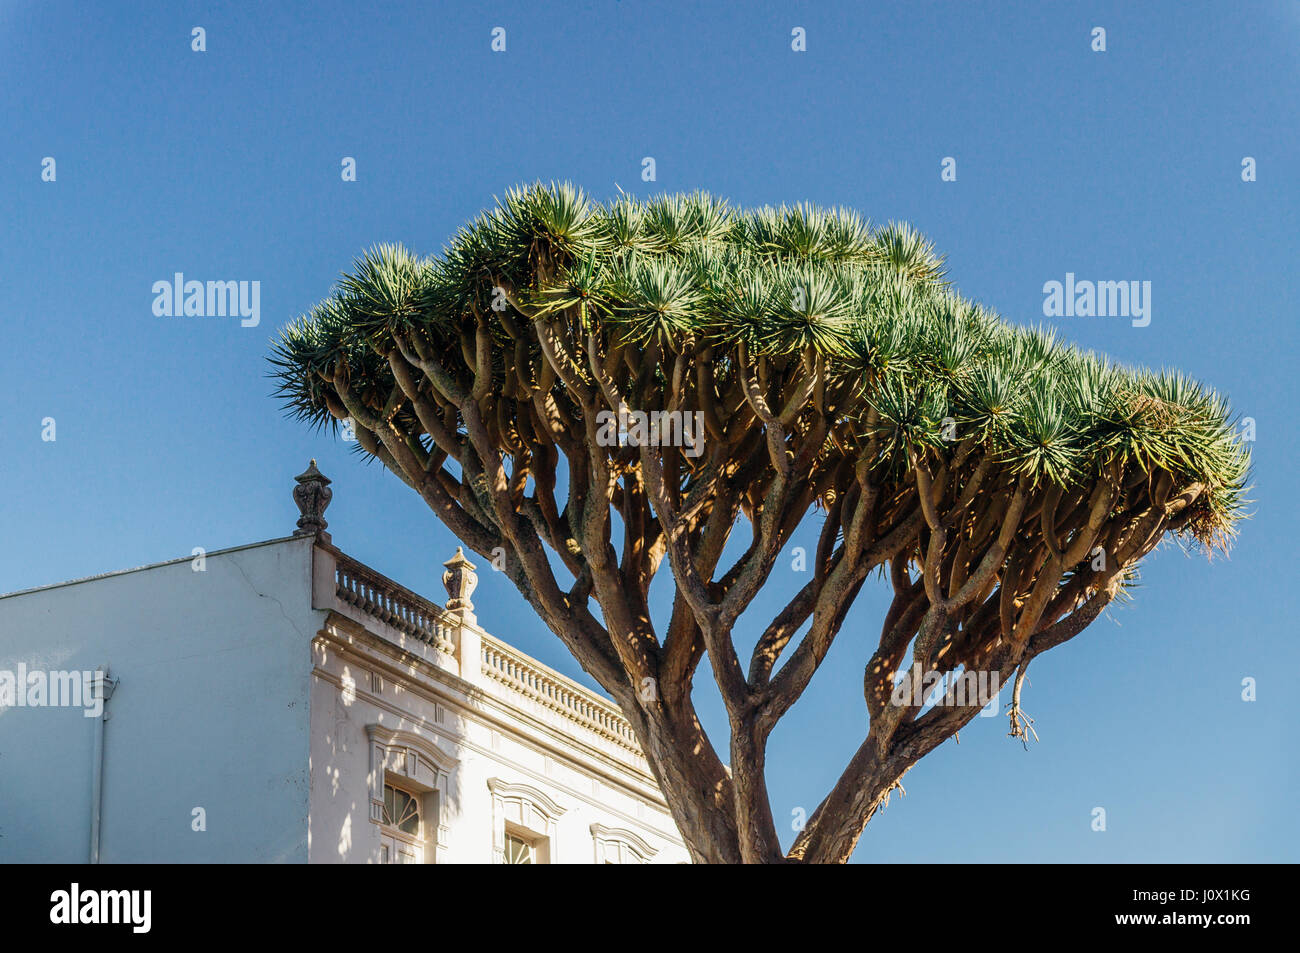 Dracaena draco or dragon tree is natural symbol of Tenerife island Stock Photo